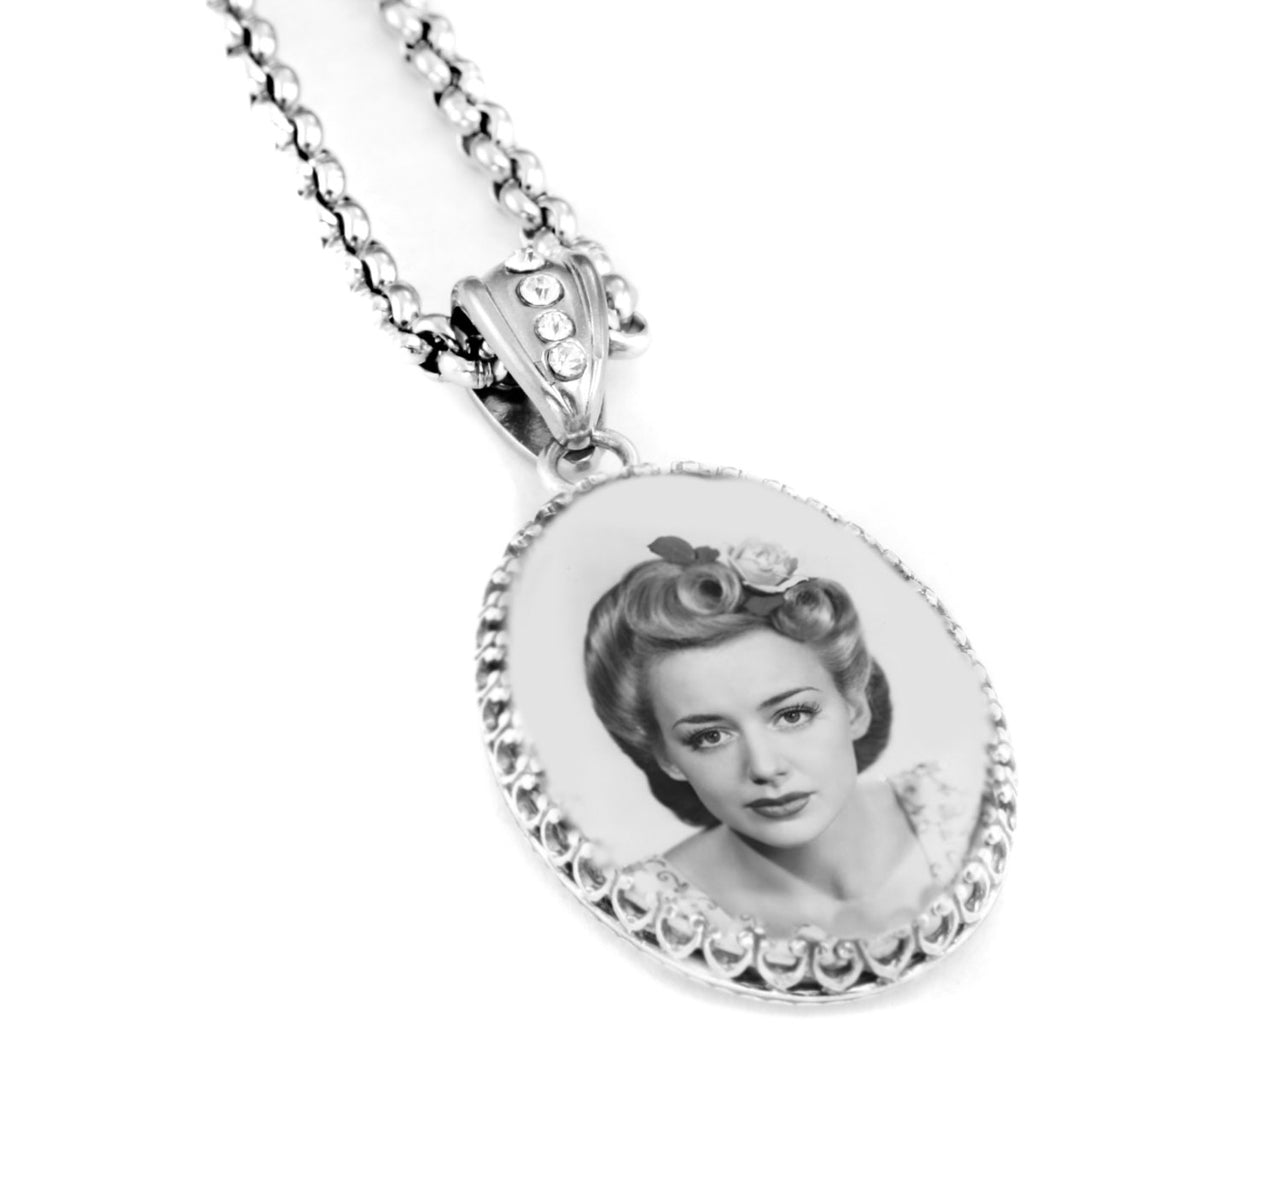 personalized jewelry, pendant